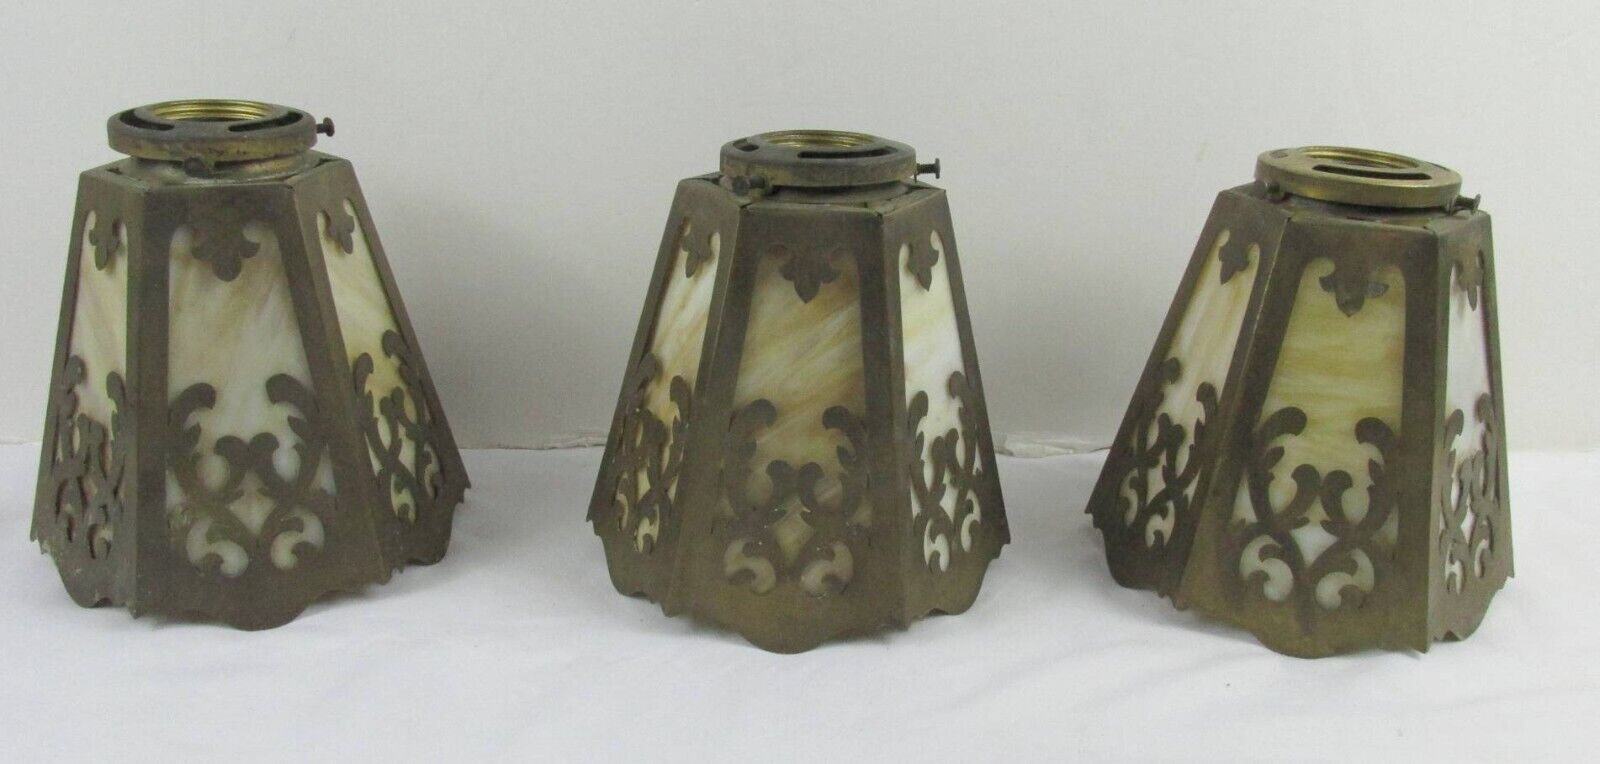 Antique Small Slag Glass Lamp Shades 3 pieces Art Deco